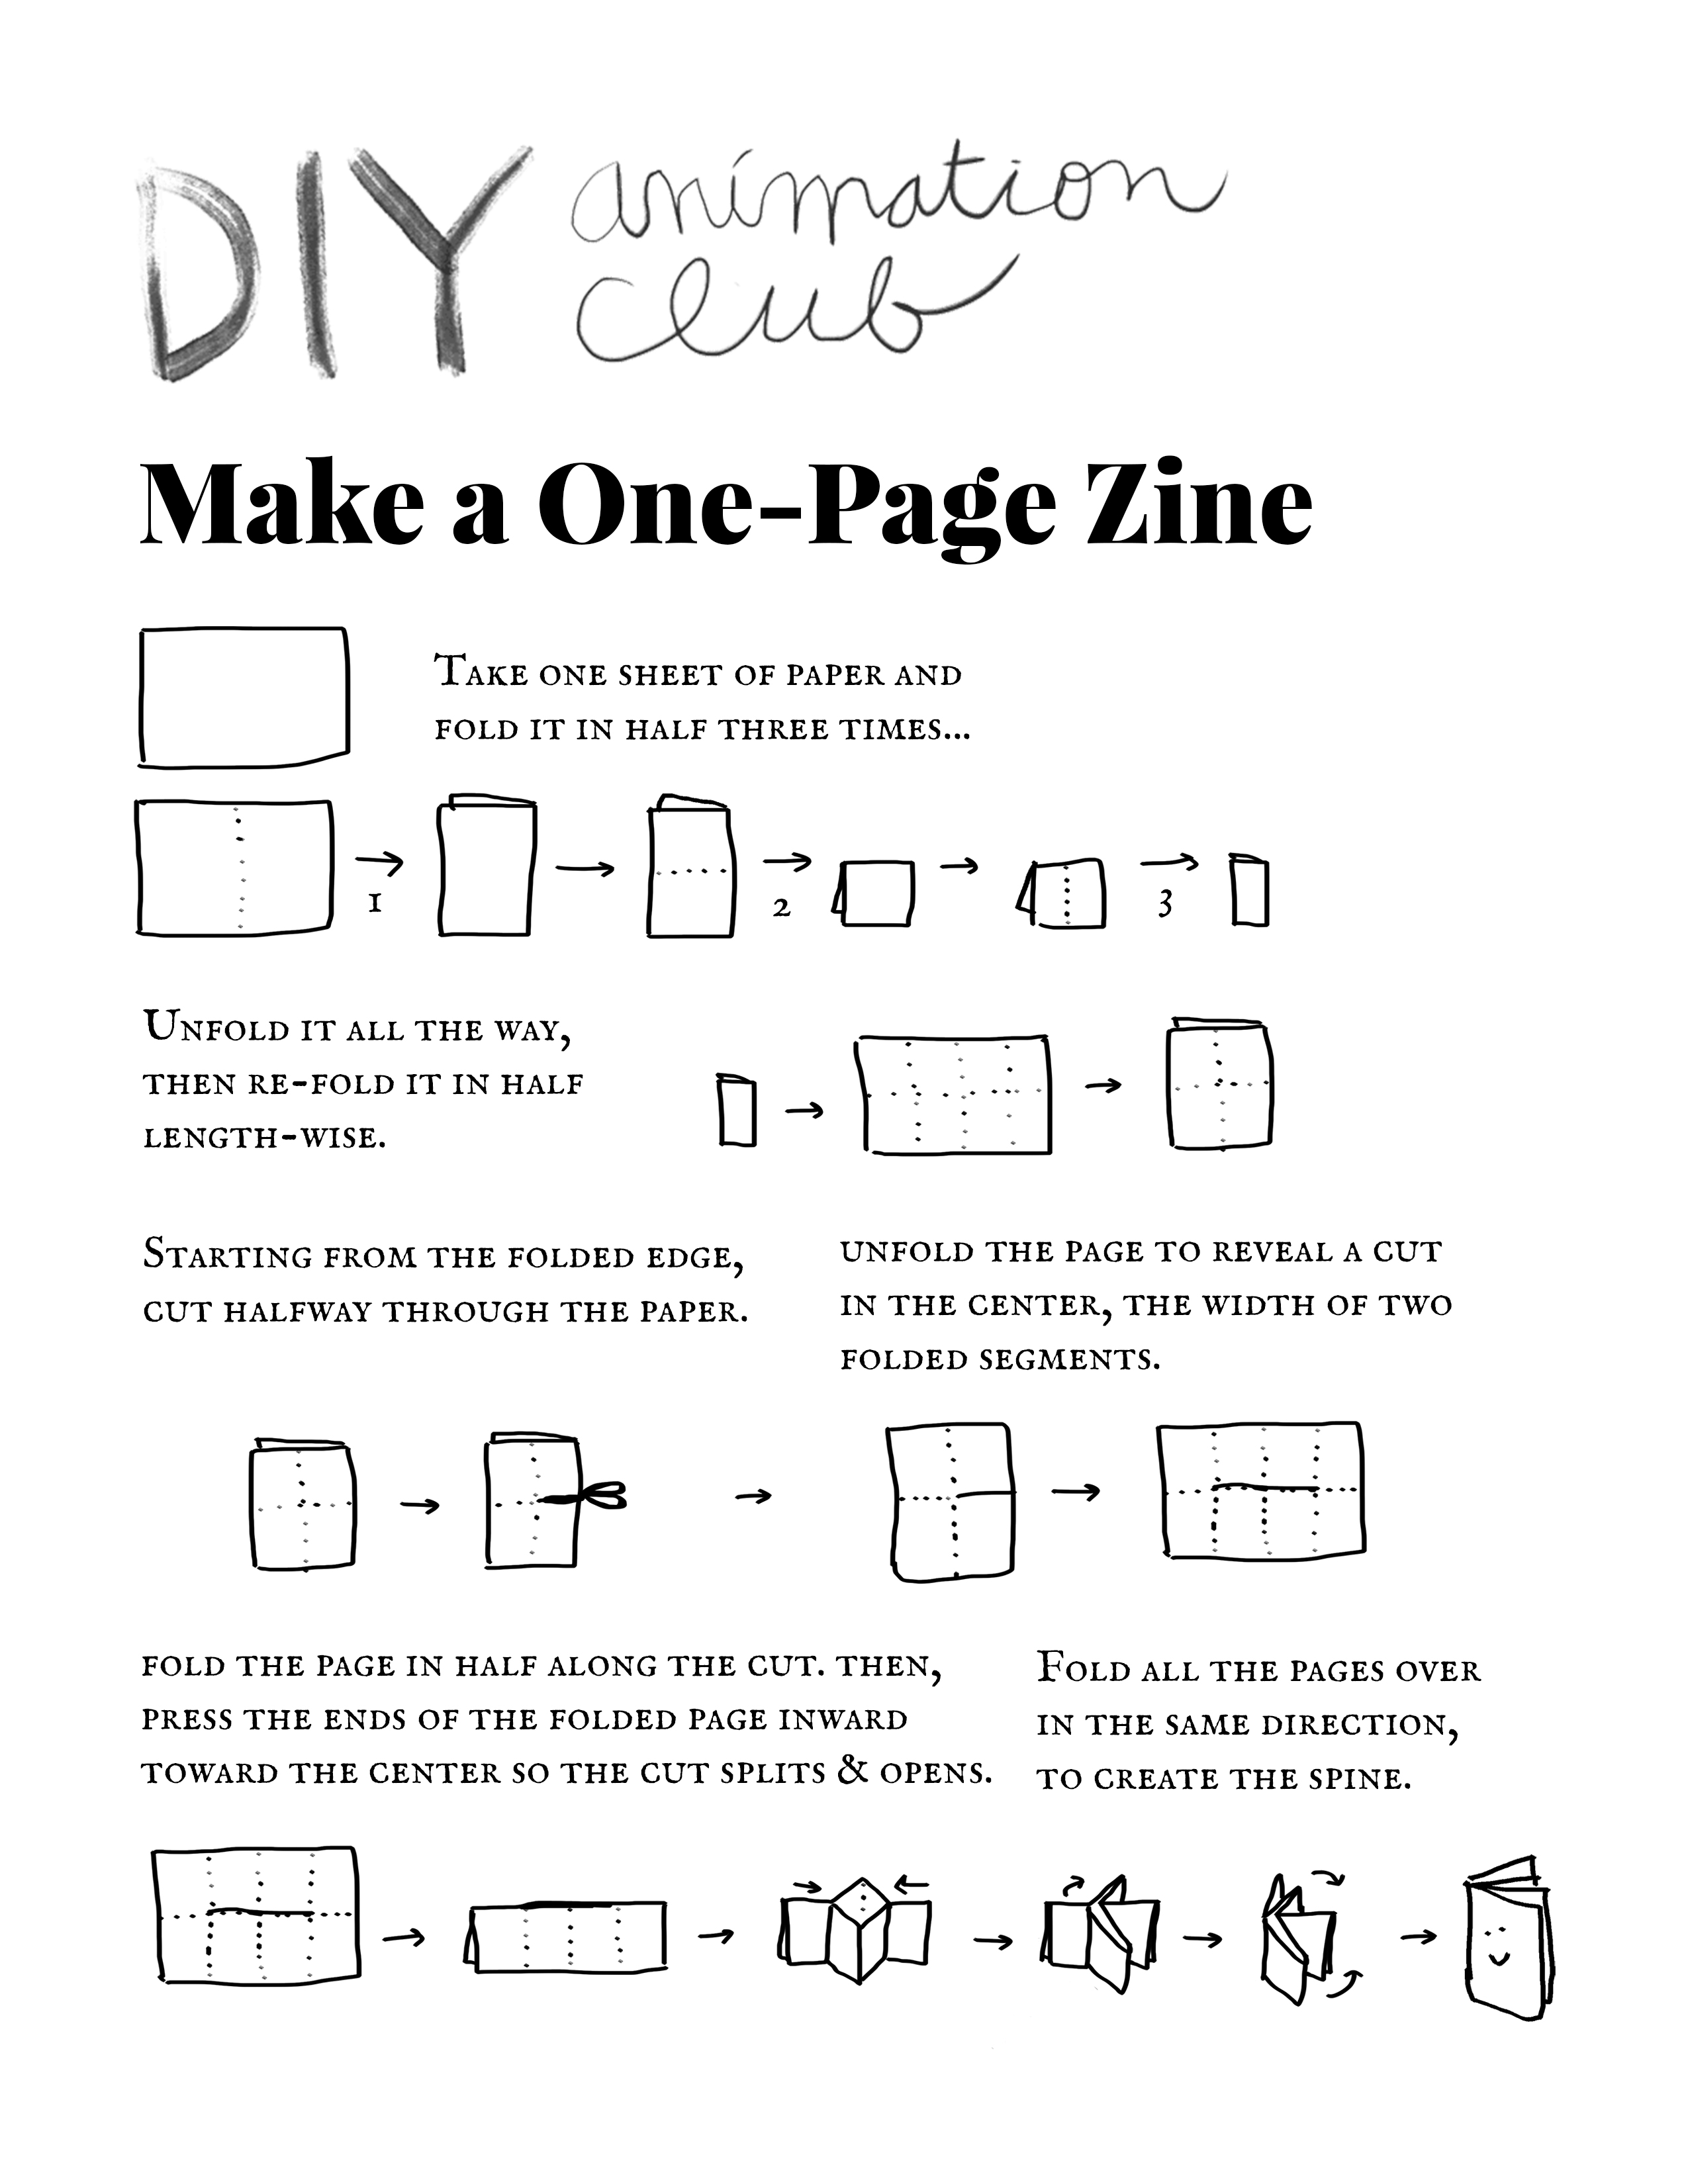 The OnePage Zine As Brainstorming Tool DIY Animation Club